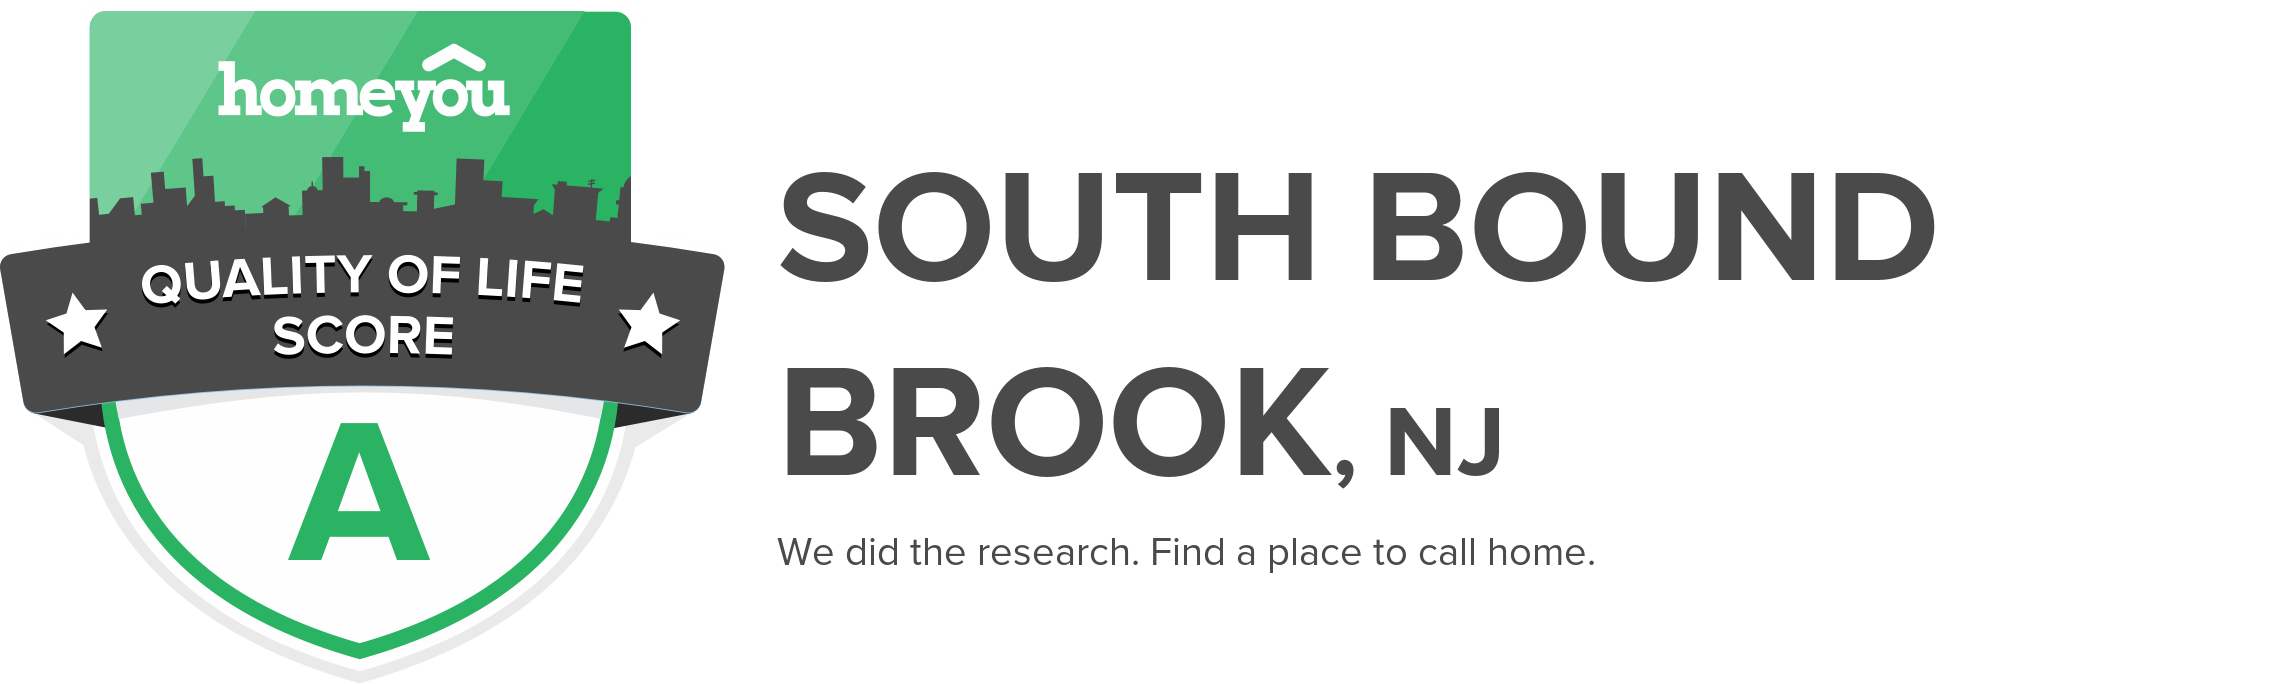 South Bound Brook, NJ